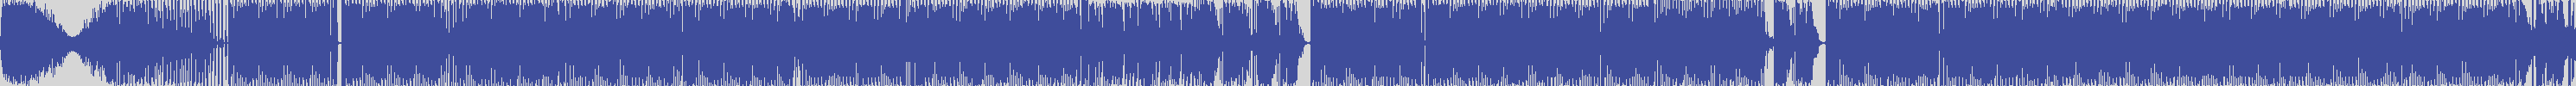 vitti_records [VIT010] Tosky - Lexi More [Original Mix] audio wave form